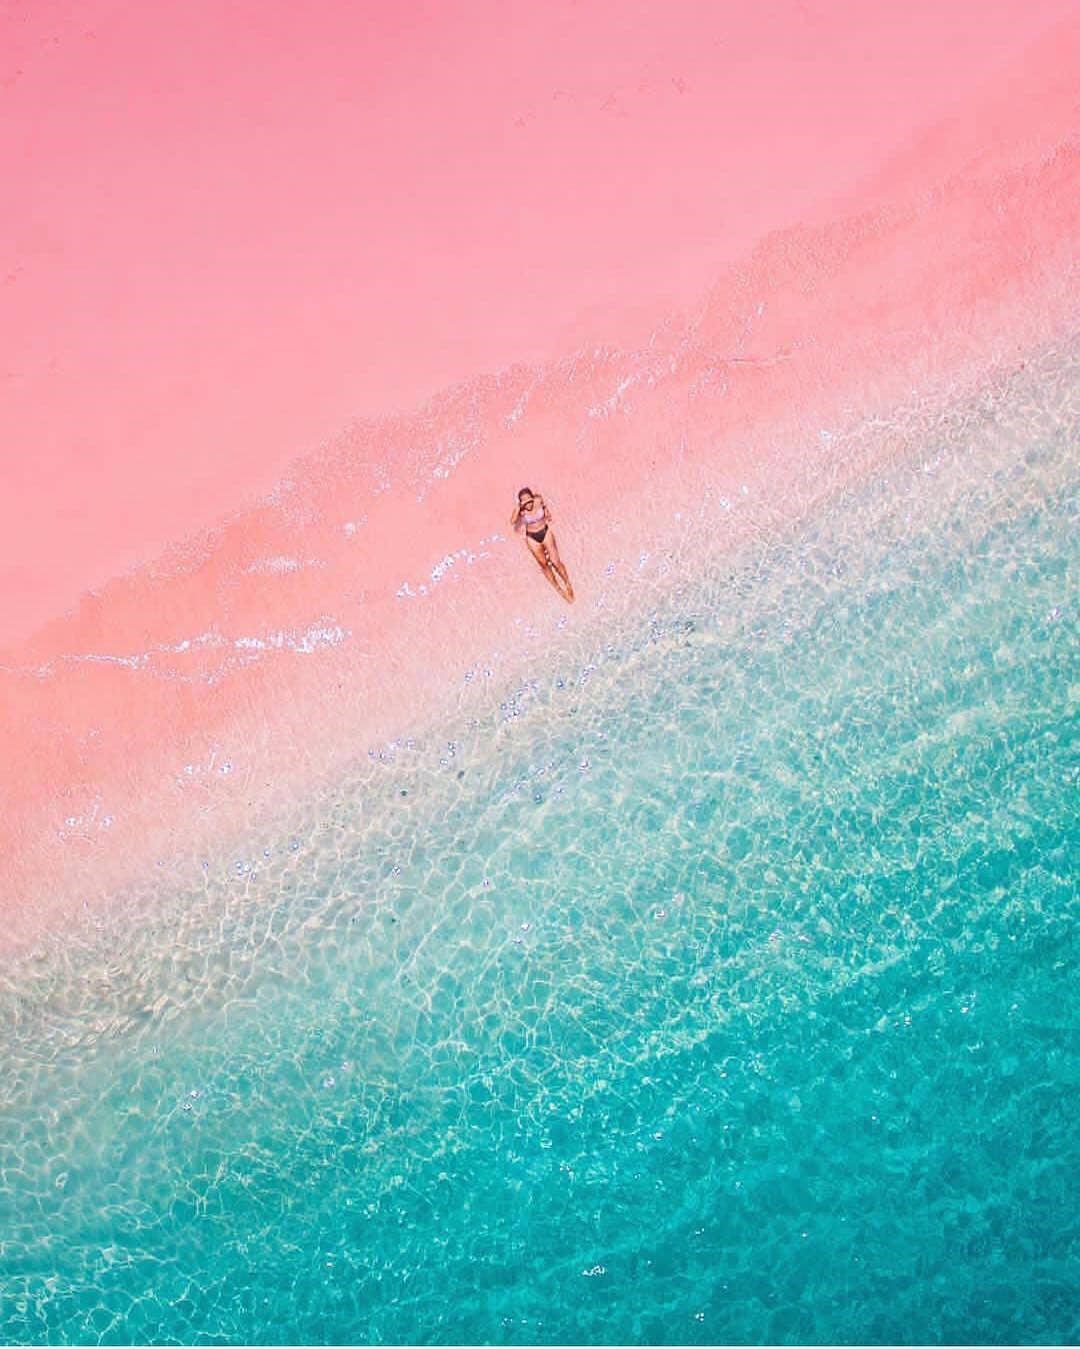 Pink Beach Komodo Island Small : Wallpapers13.com